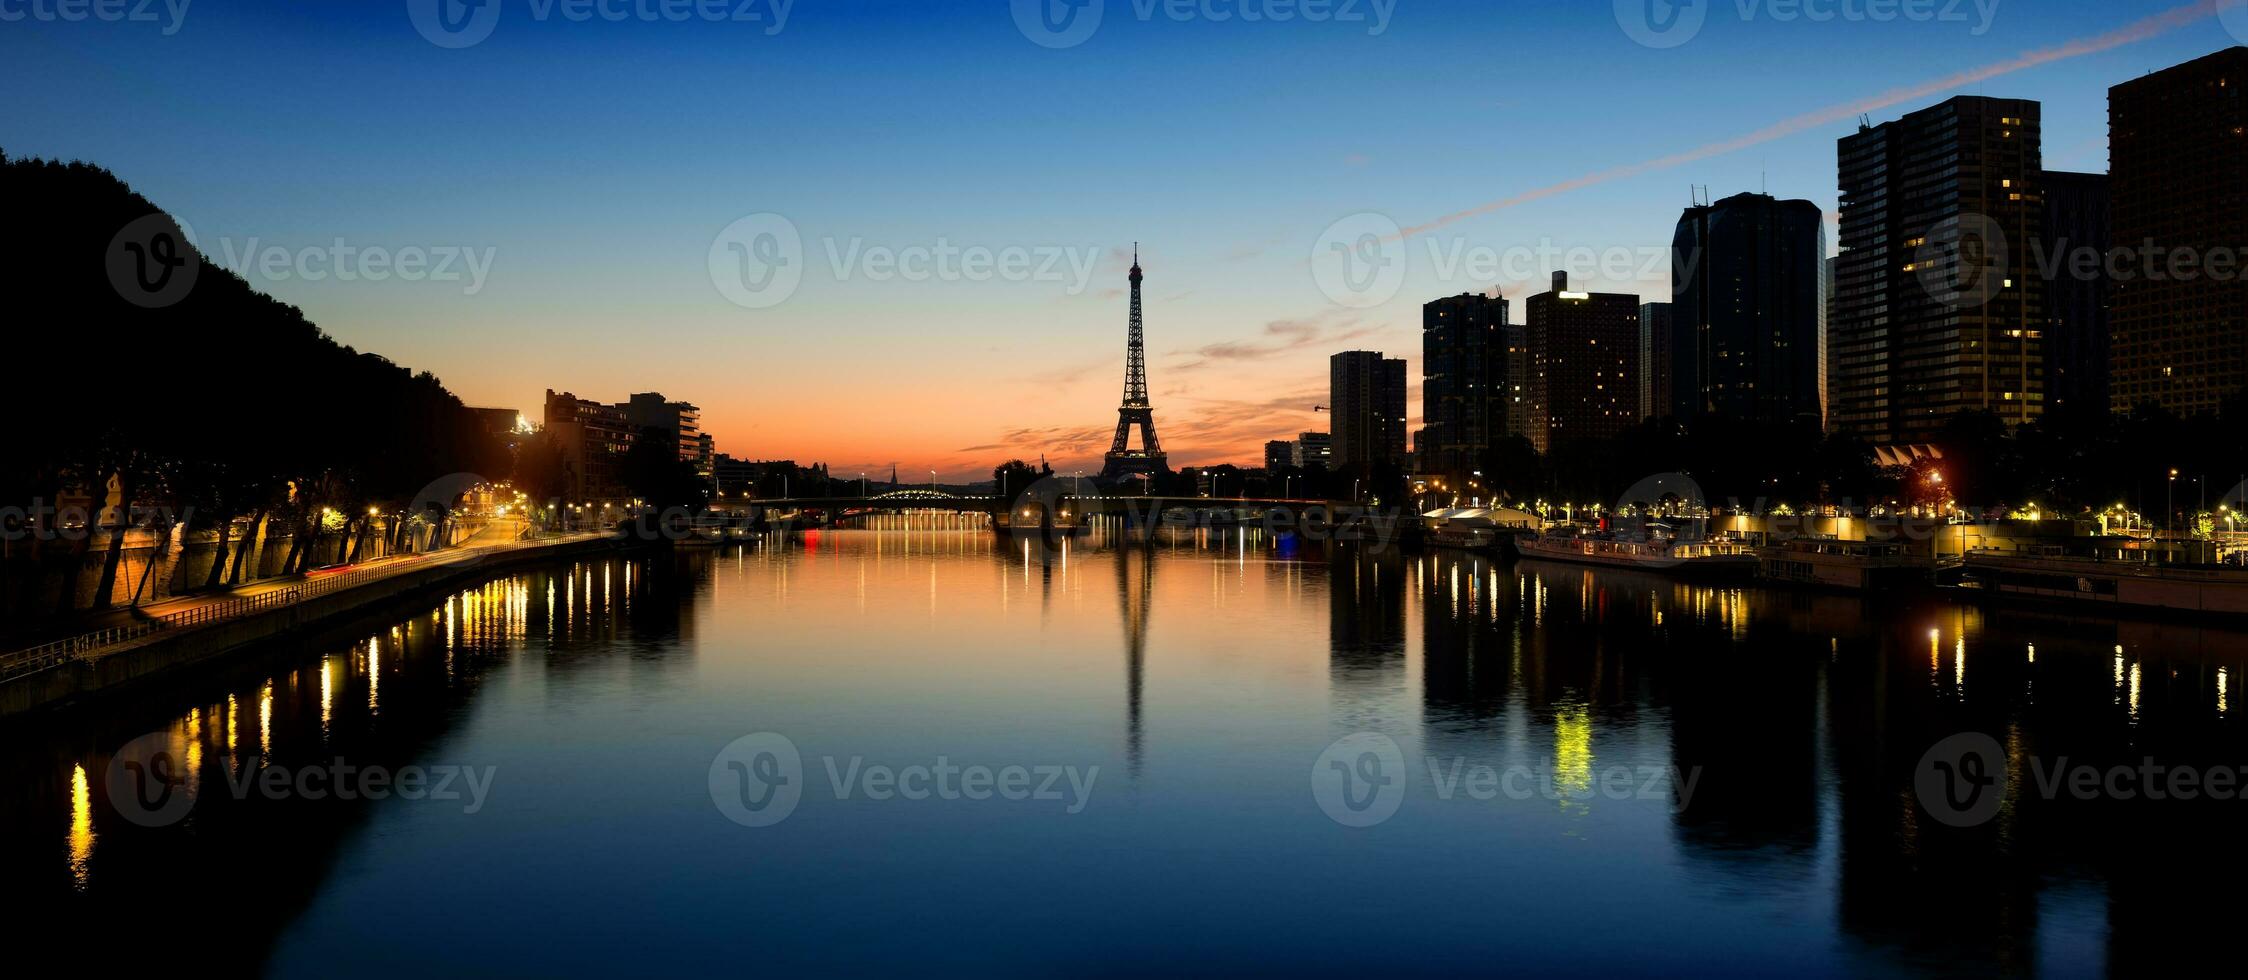 Parijse ochtend- landschap foto